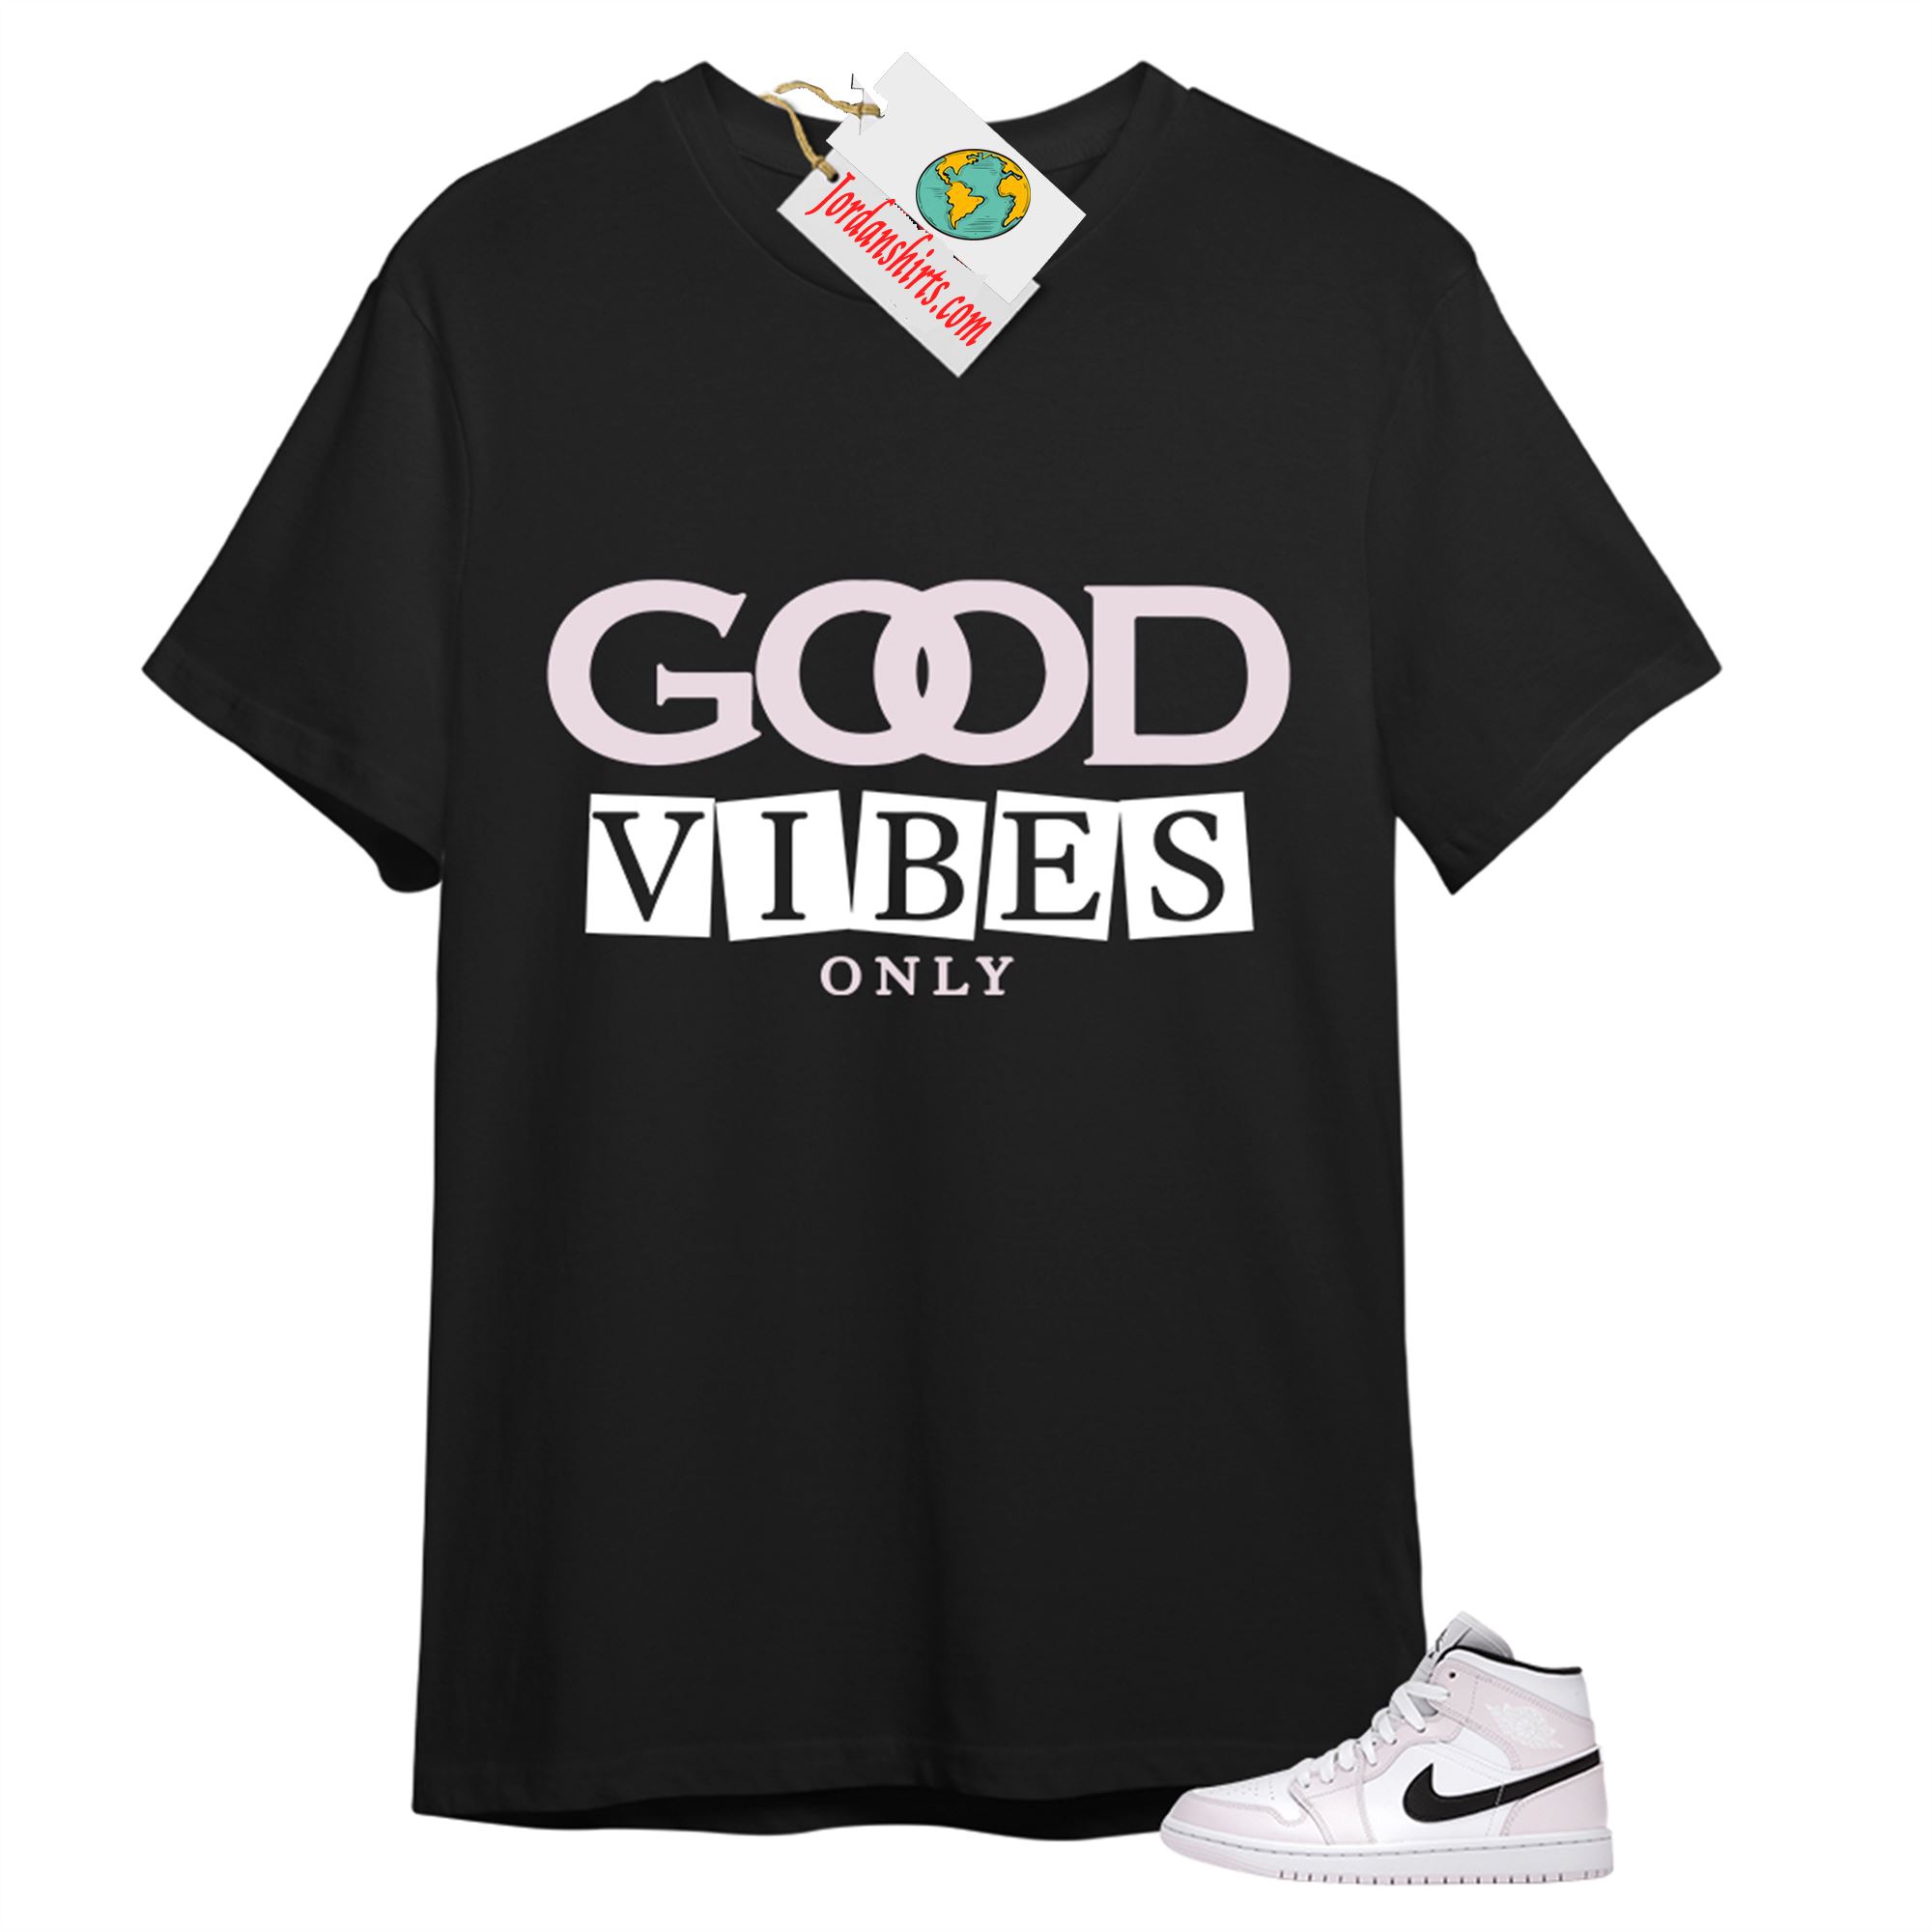 Jordan 1 Shirt, Good Vibes Only Black T-shirt Air Jordan 1 Barely Rose 1s Full Size Up To 5xl